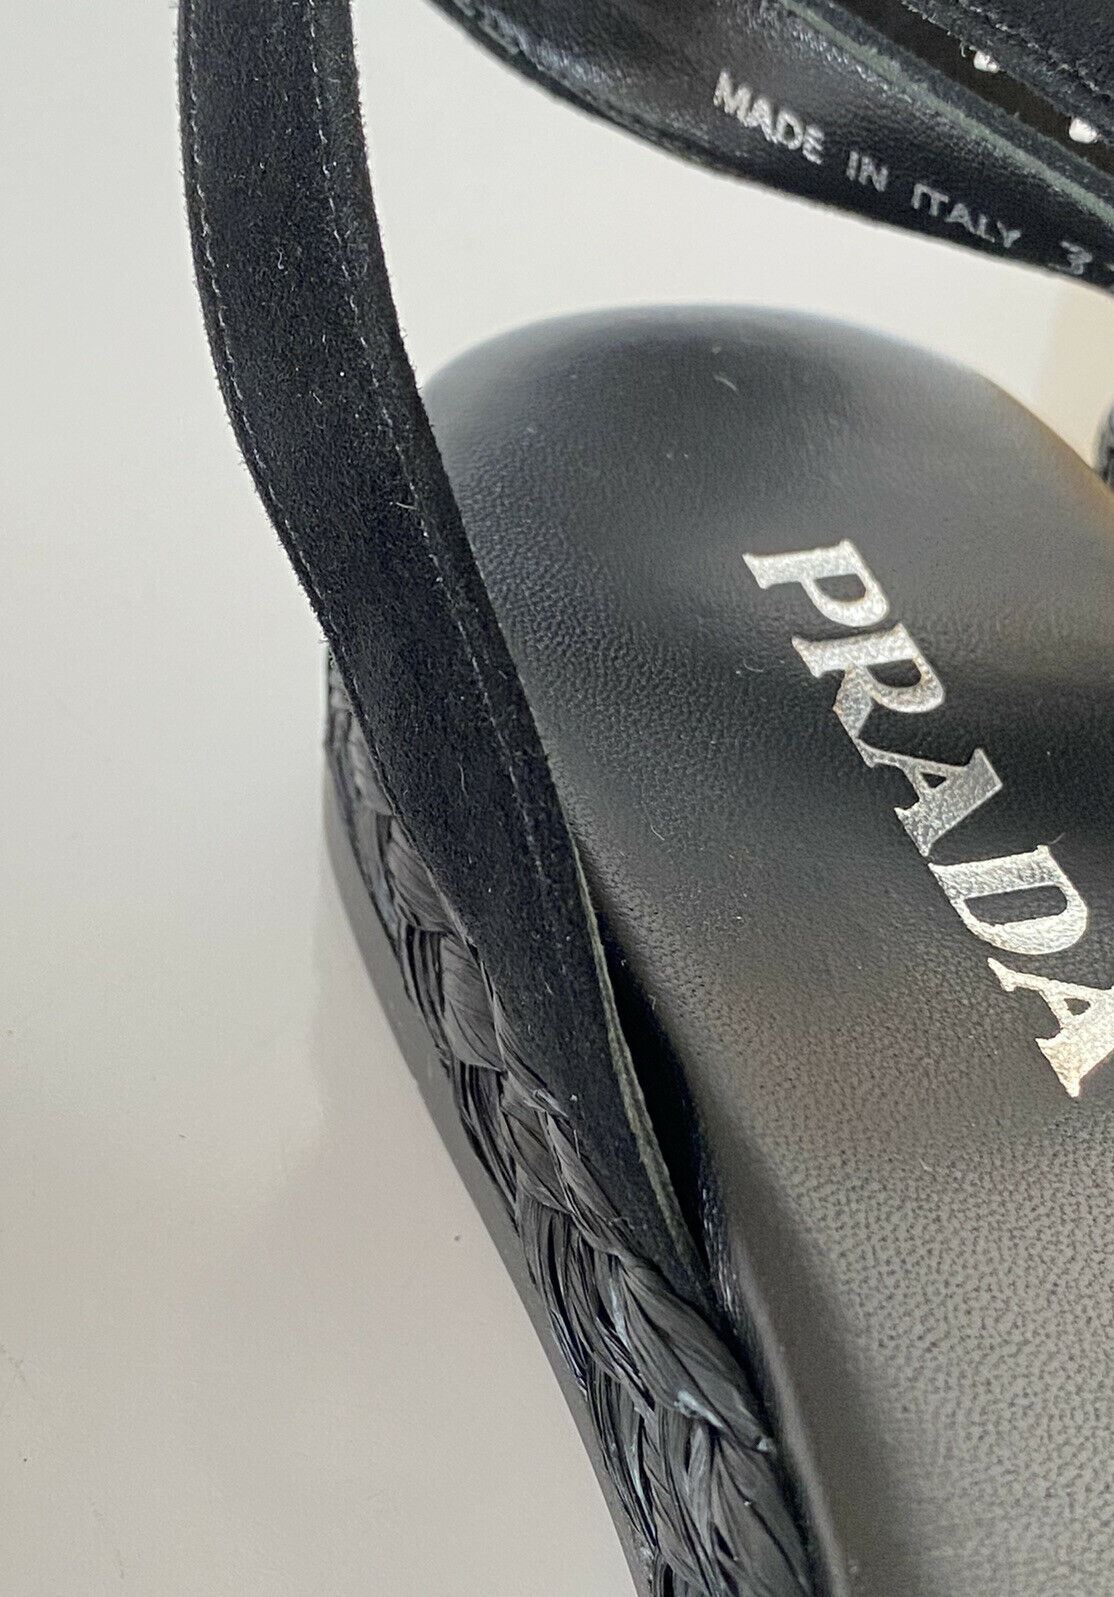 NIB Prada Damen-Espadrille-Sandale aus schwarzem Wildleder, 7,5 US 1X360L, Italien 